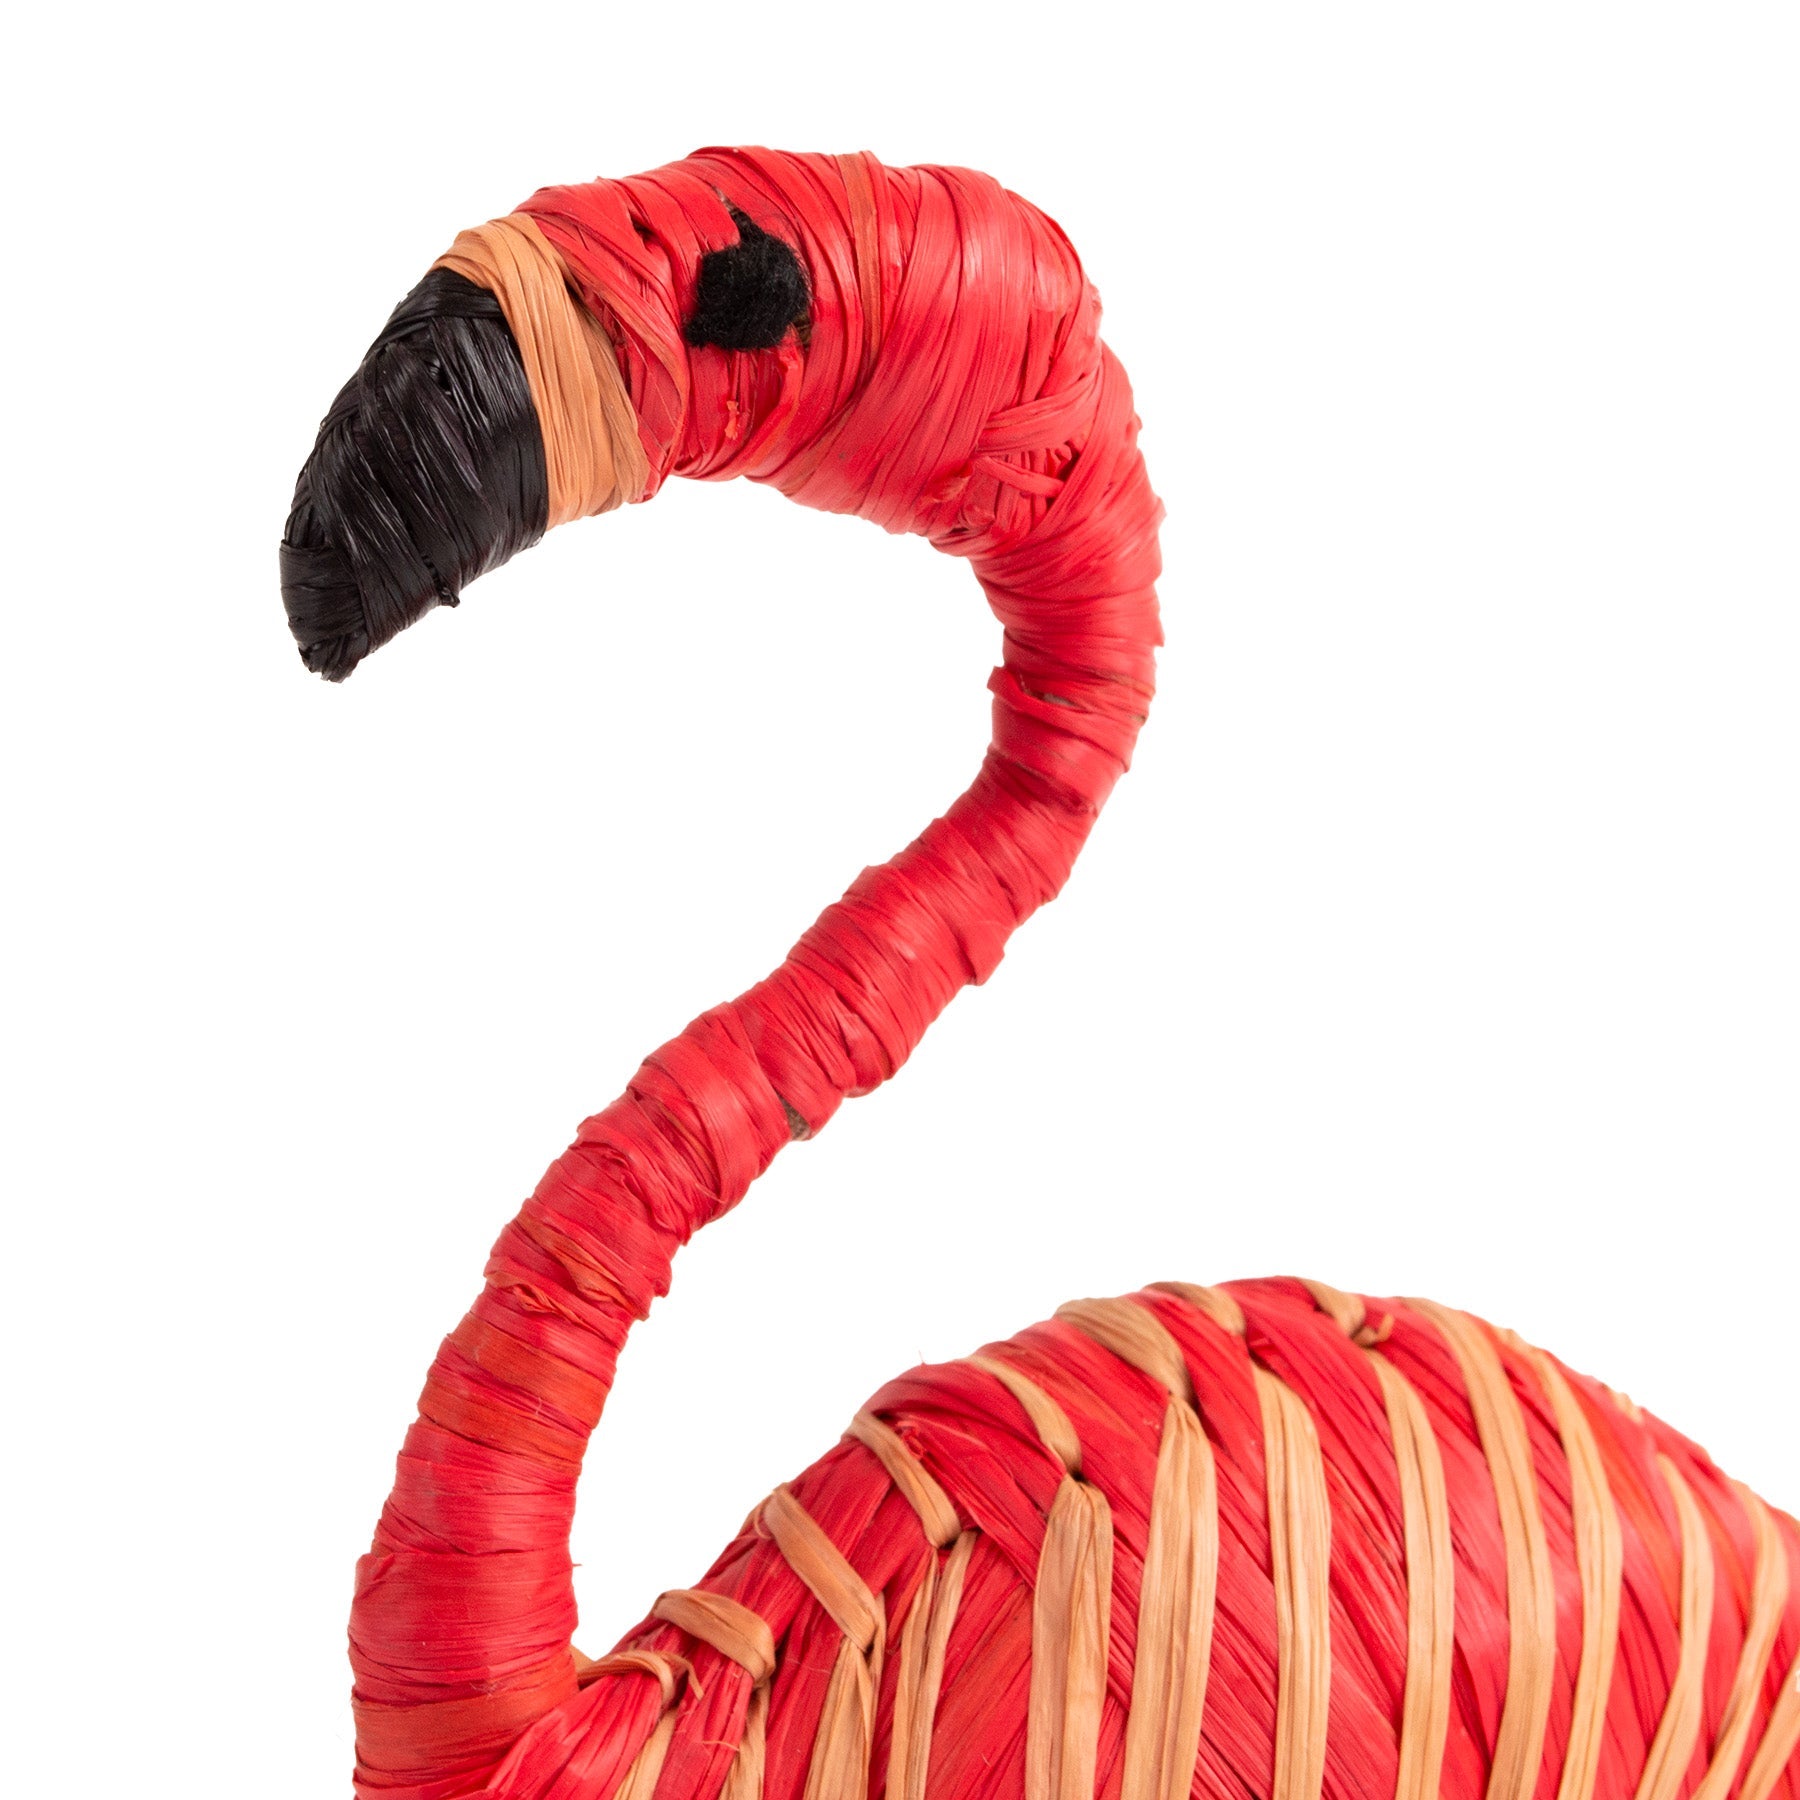 7" Flamingo Seratonia Figurine